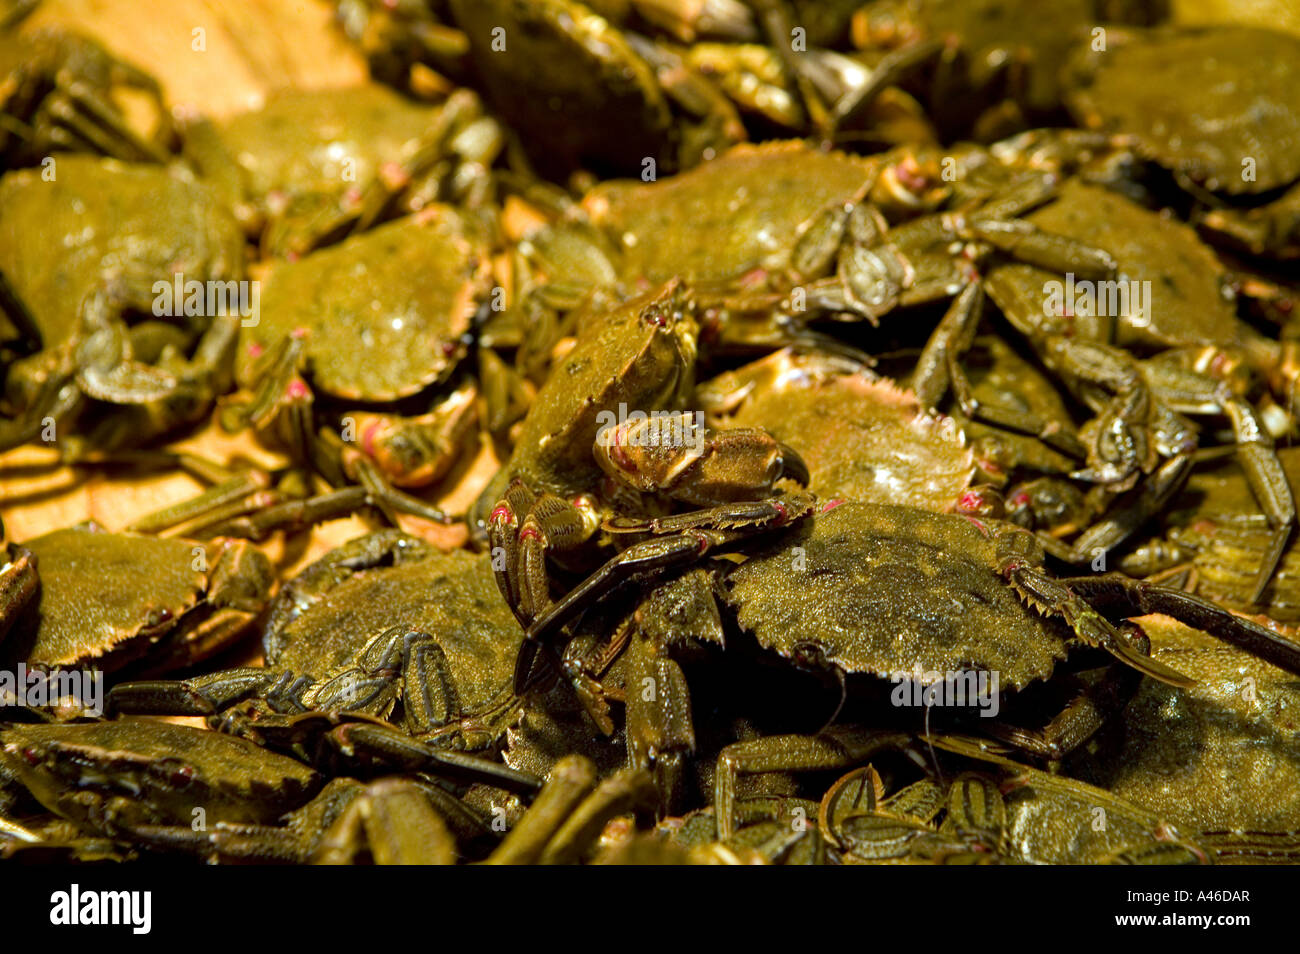 Live crabs on sale in Mercado de la Rivera, Bilbao, Pais Vasco